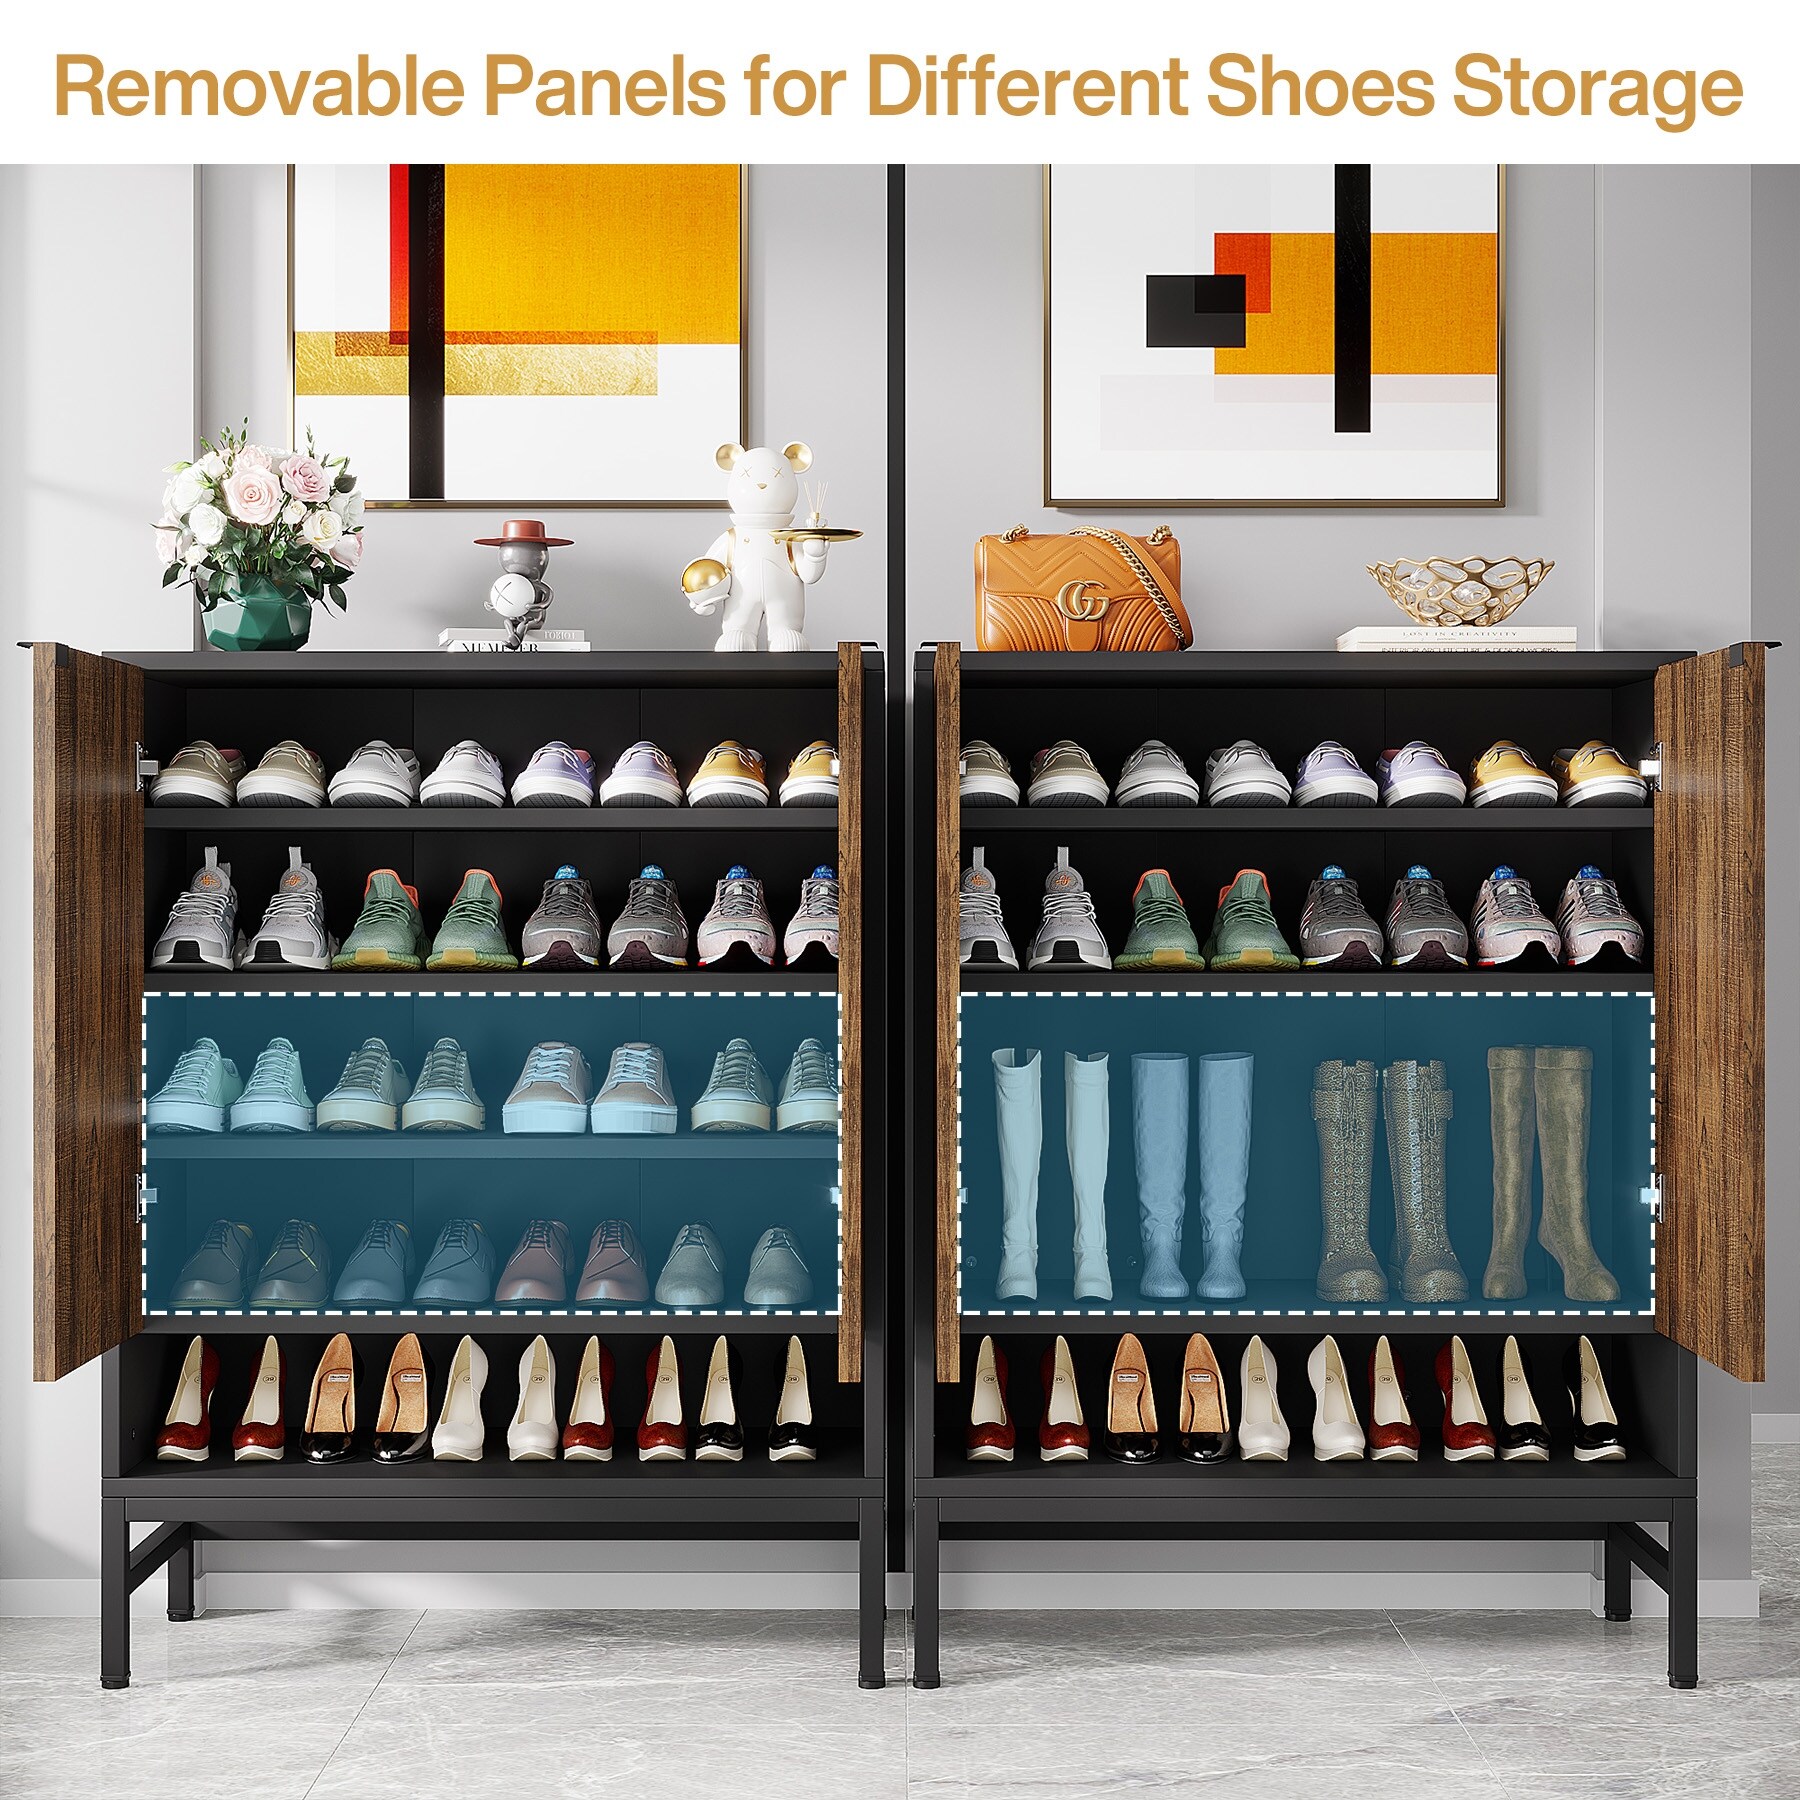 UDEAR Bamboo Shoe Rack 5-tier Shoe Storage Organizer Entryway Shoe Shelf 